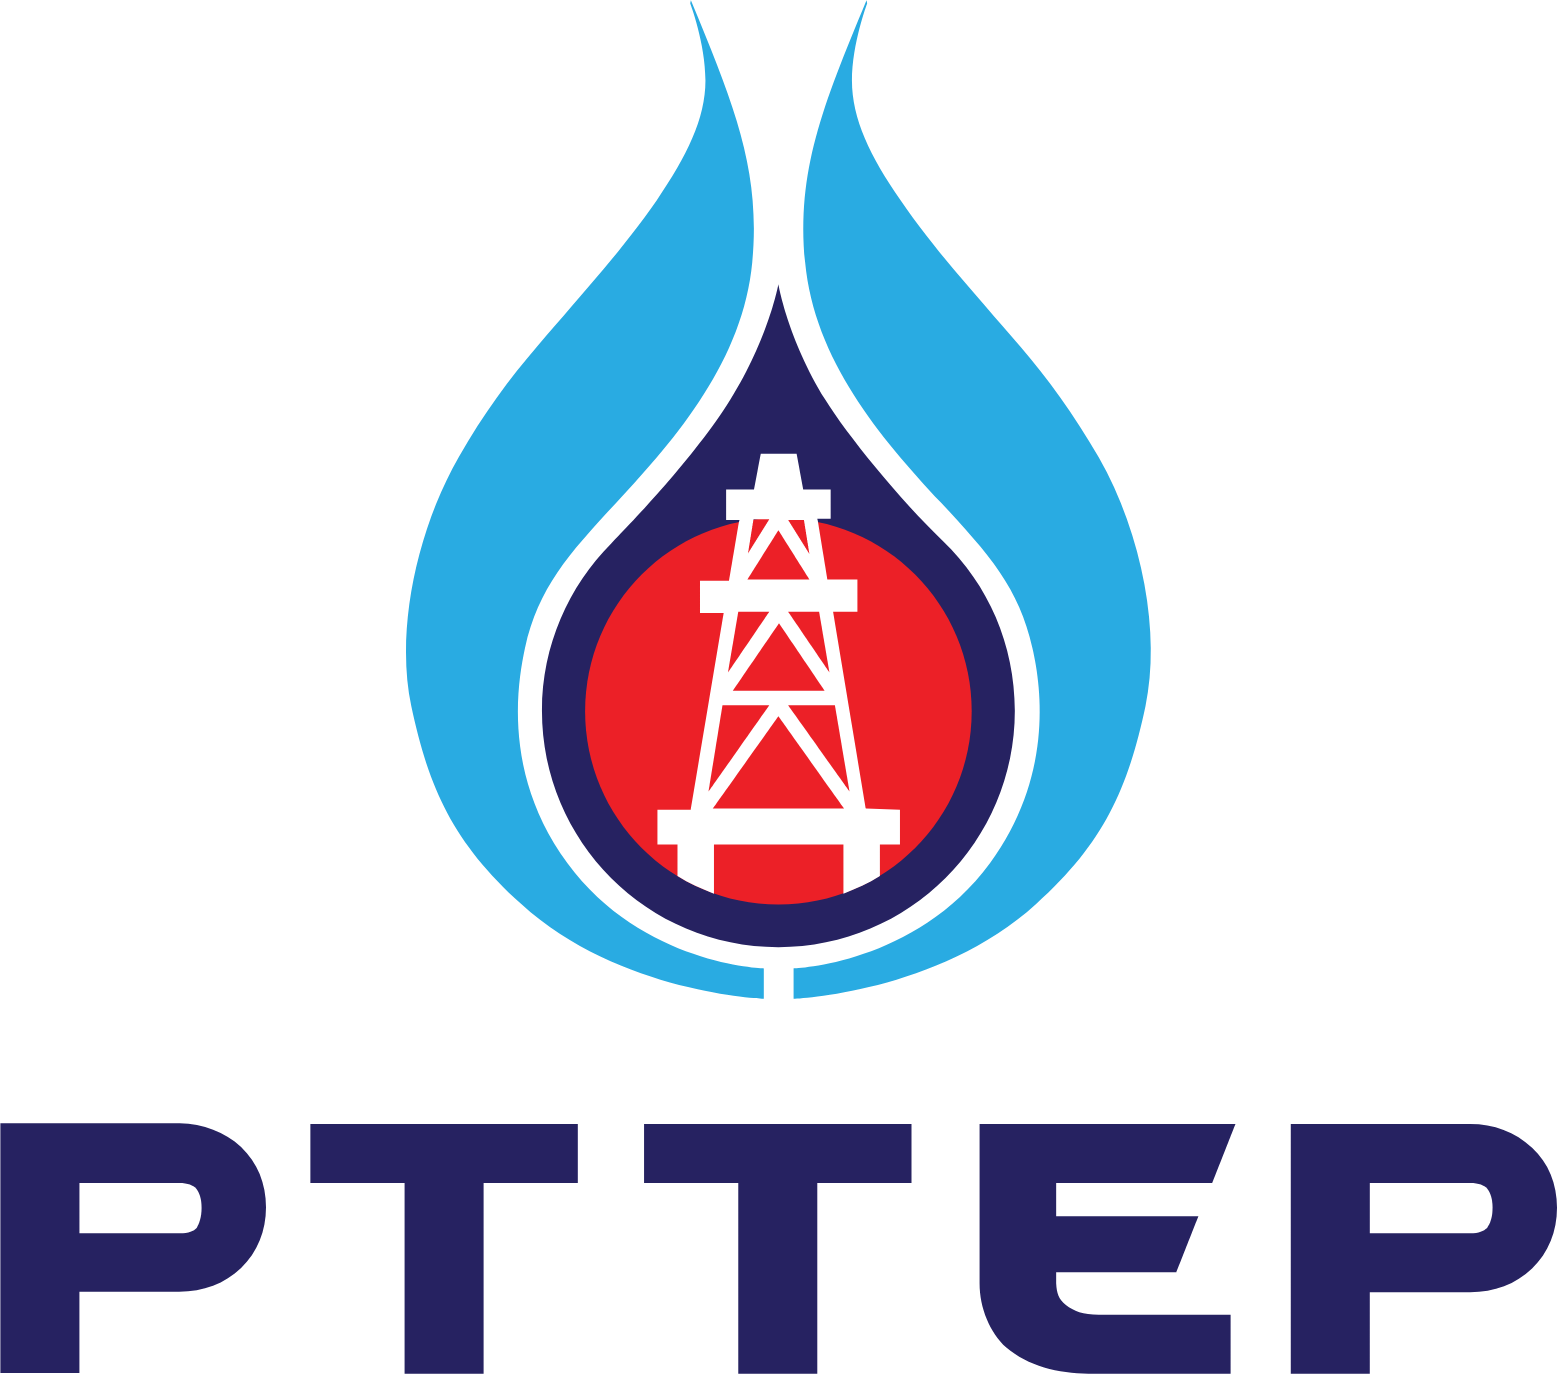 PTT Exploration and Production logo large (transparent PNG)